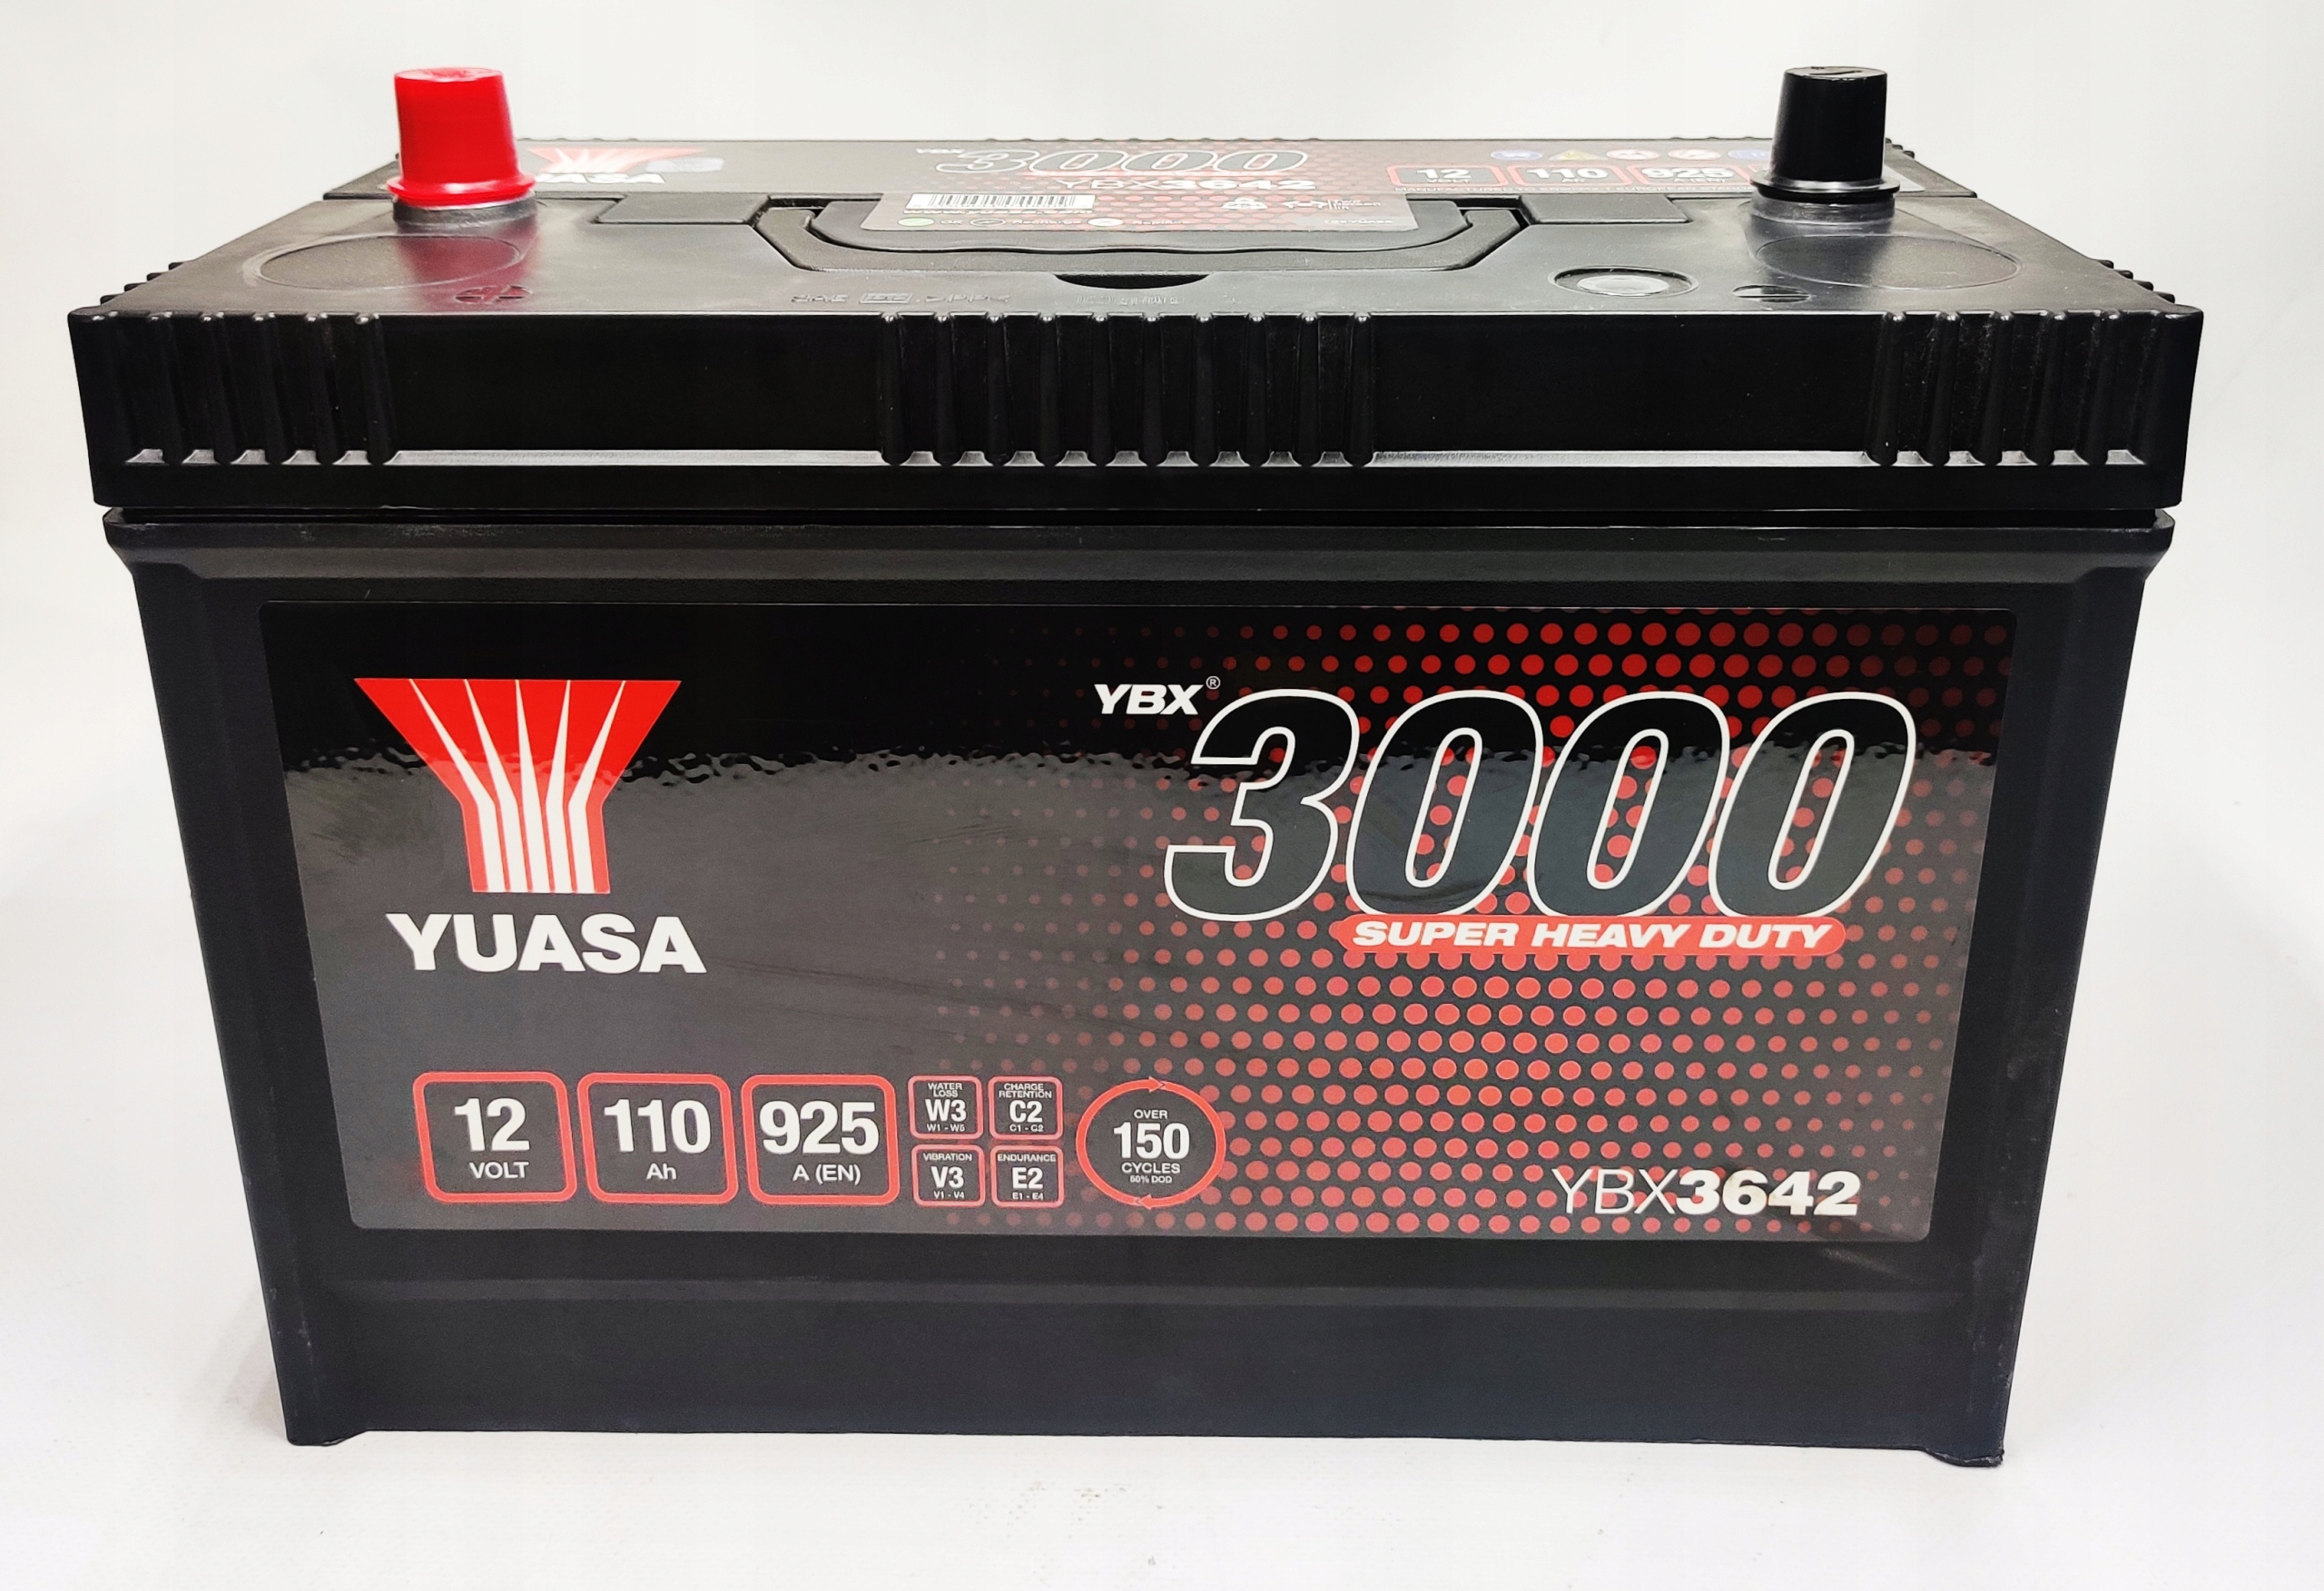 YUASA YBX3642 Batterie 12V 110Ah 925A Batterie au plomb YBX3642